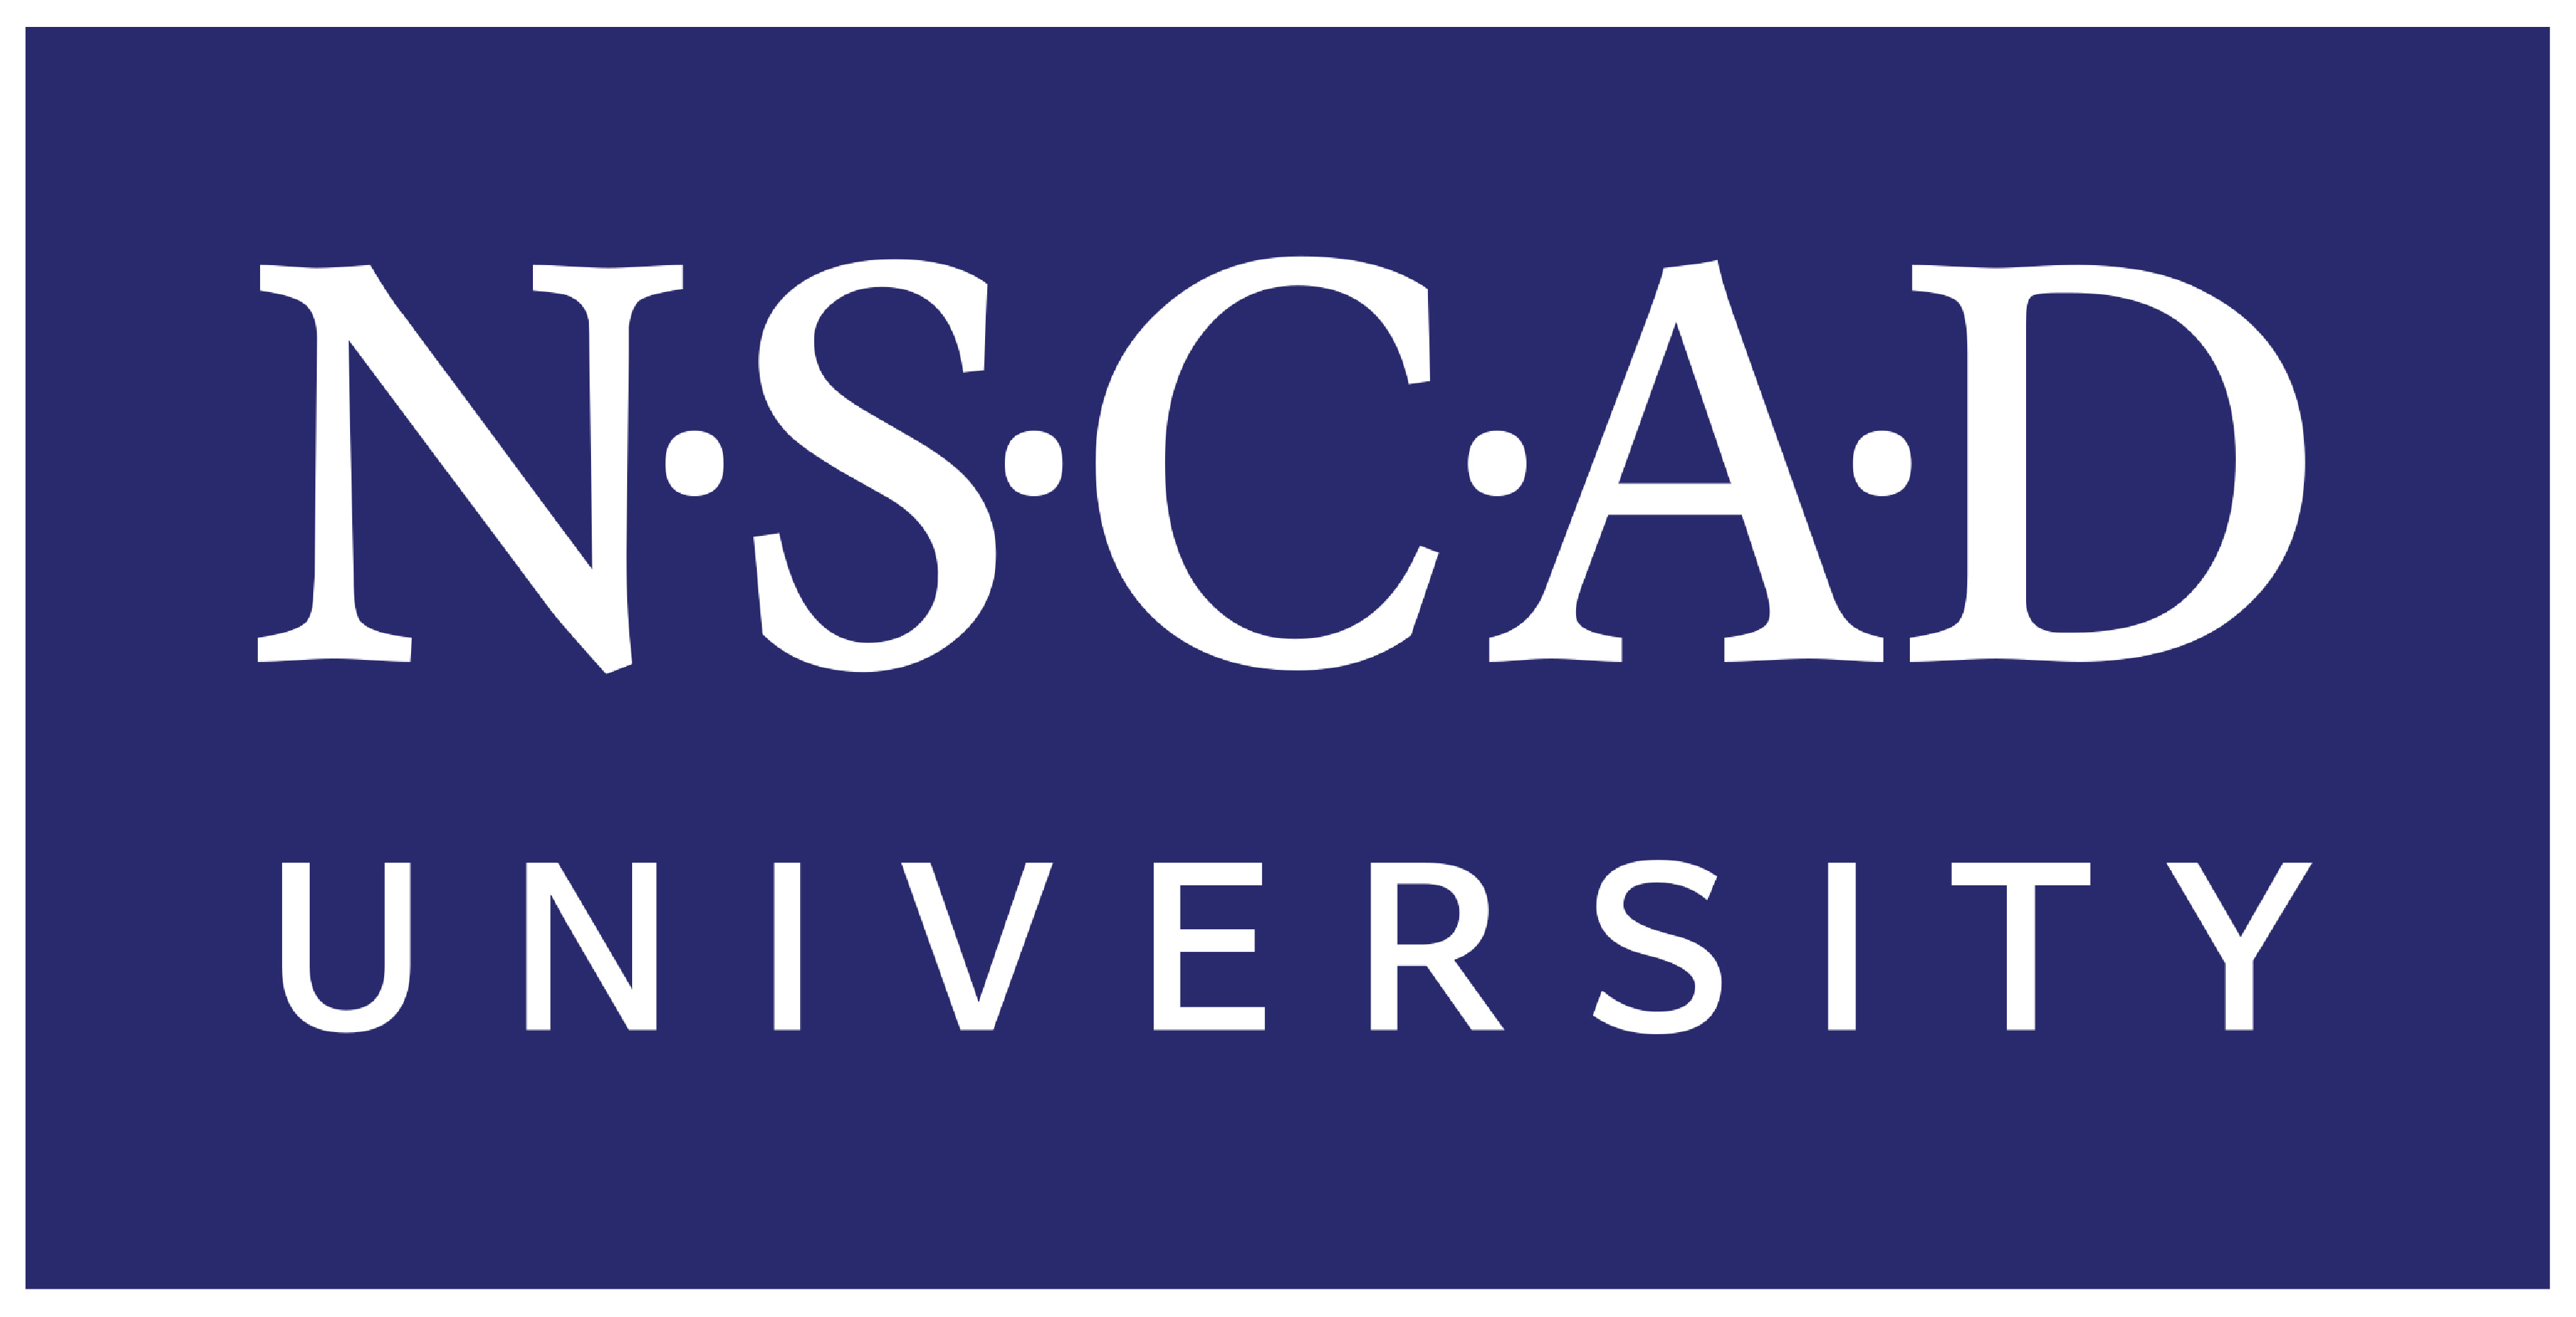 NSCAD logo